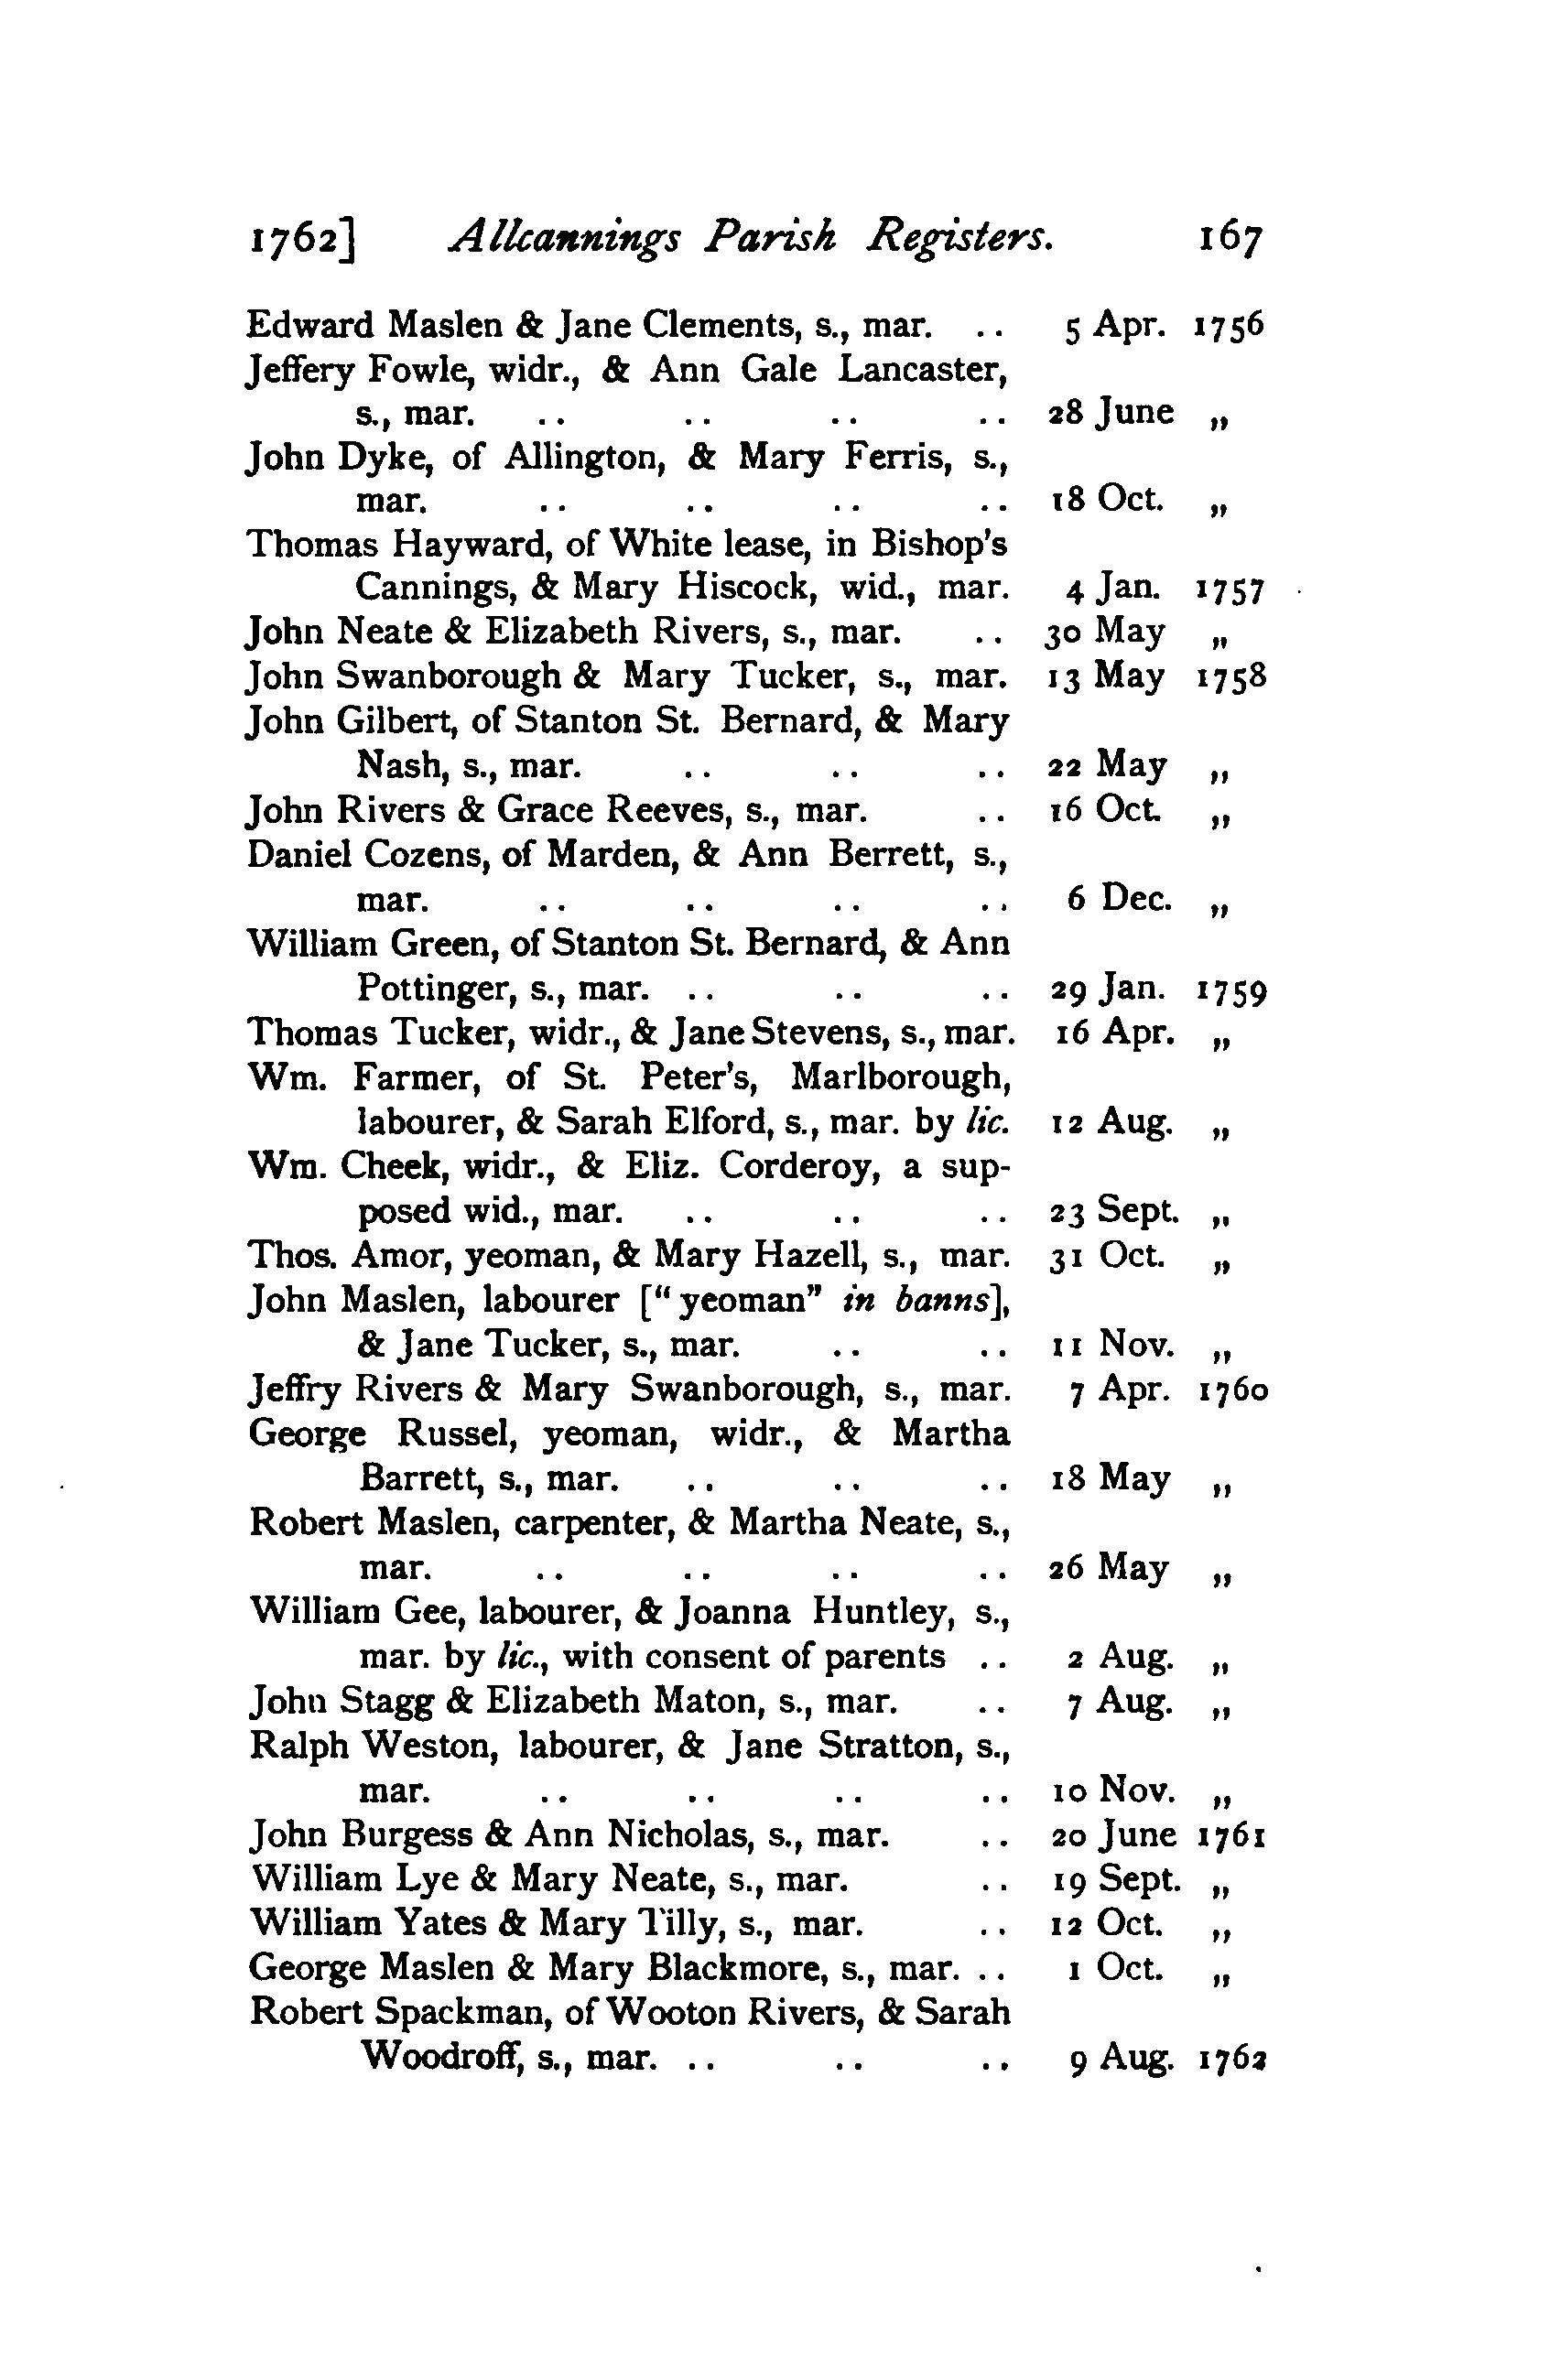 1758 marriages of Jane Stevens to Thomas Tucker and John Swanborough to Mary Tucker